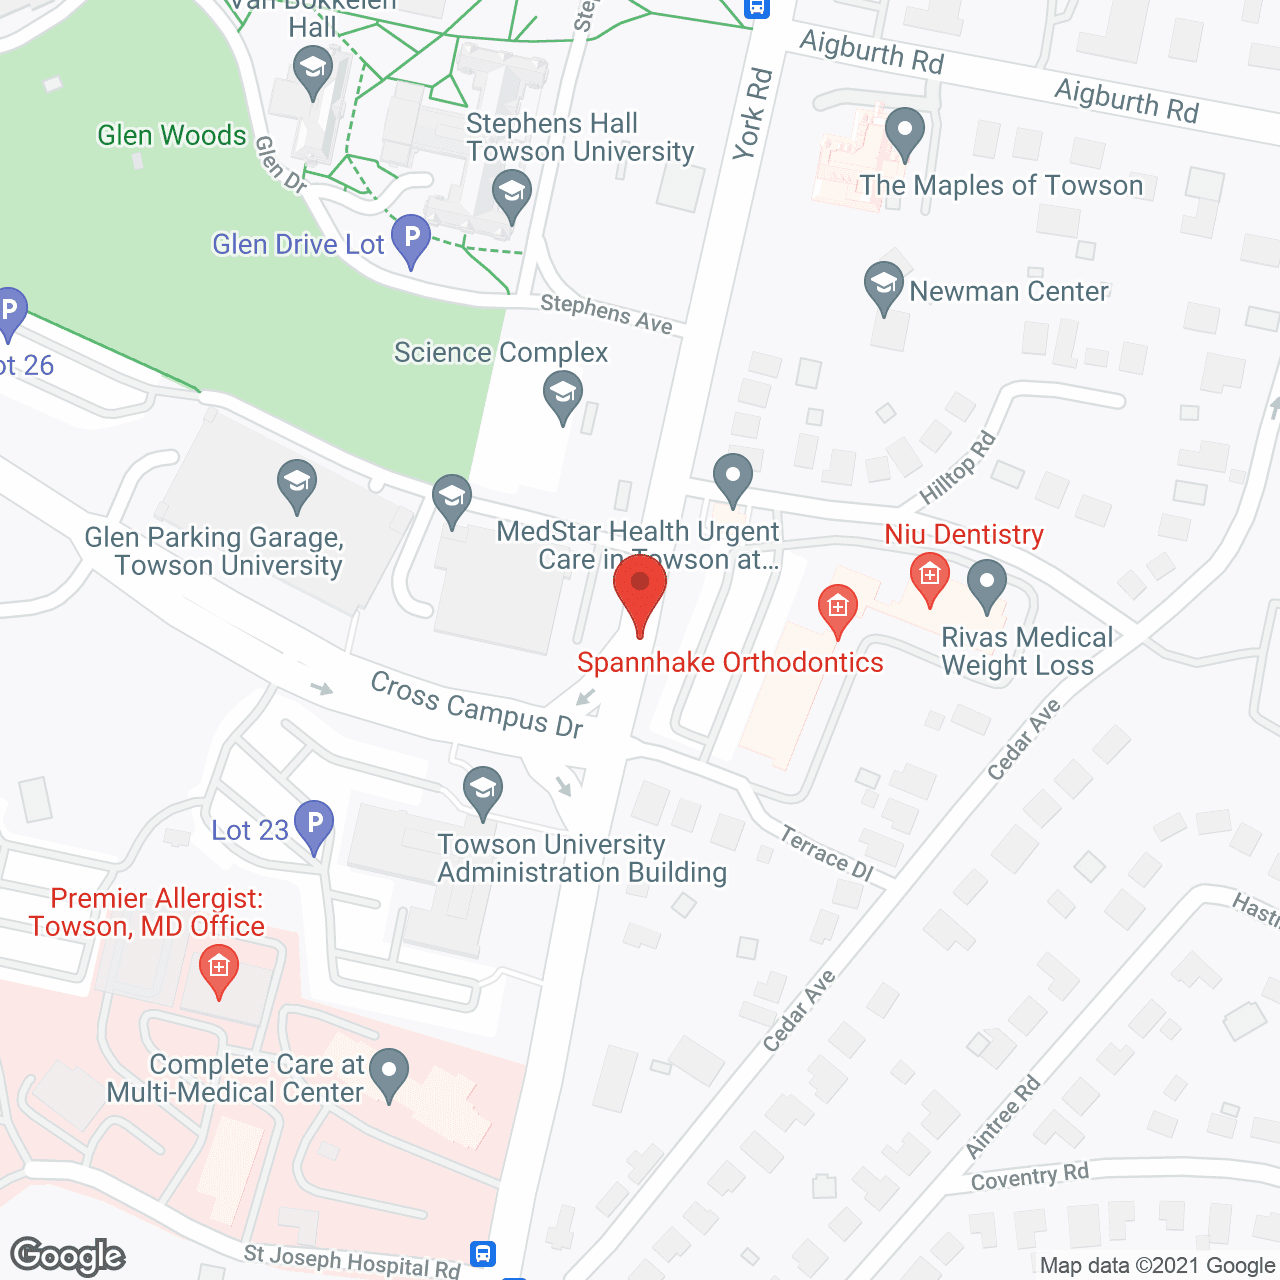 Multi-Medical Center in google map